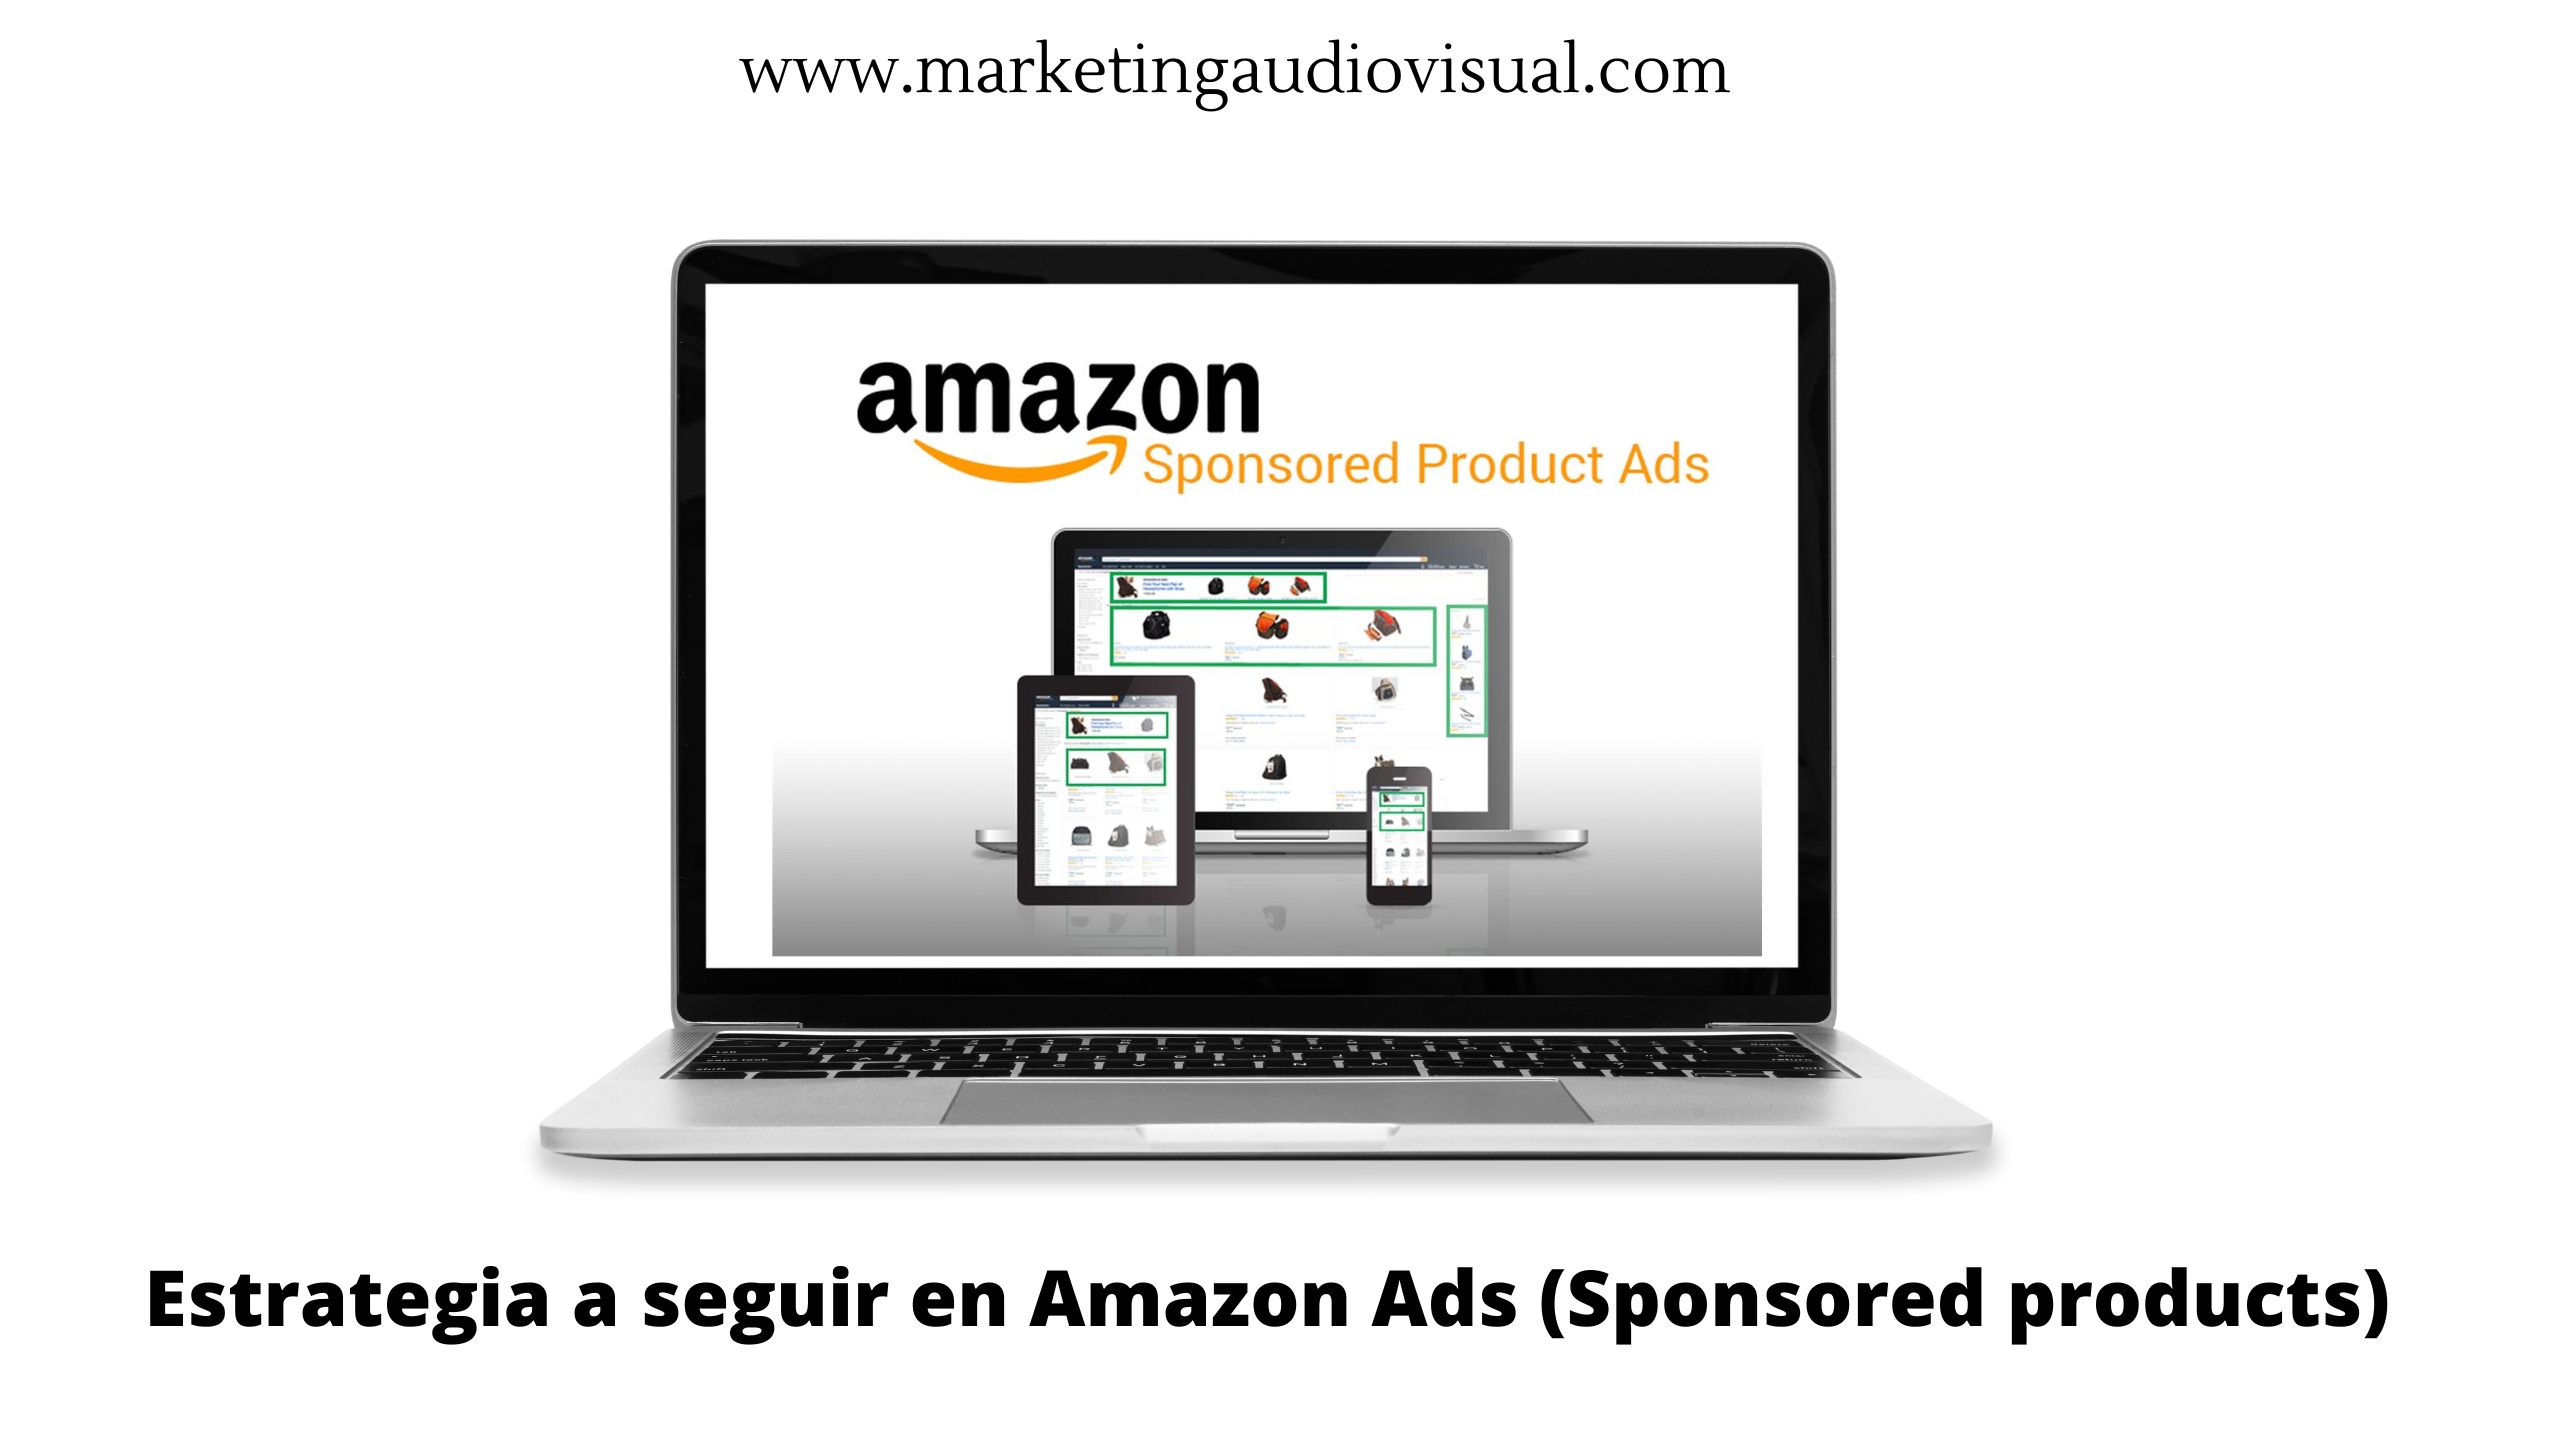 Estrategia a seguir en Amazon Ads (Sponsored products)